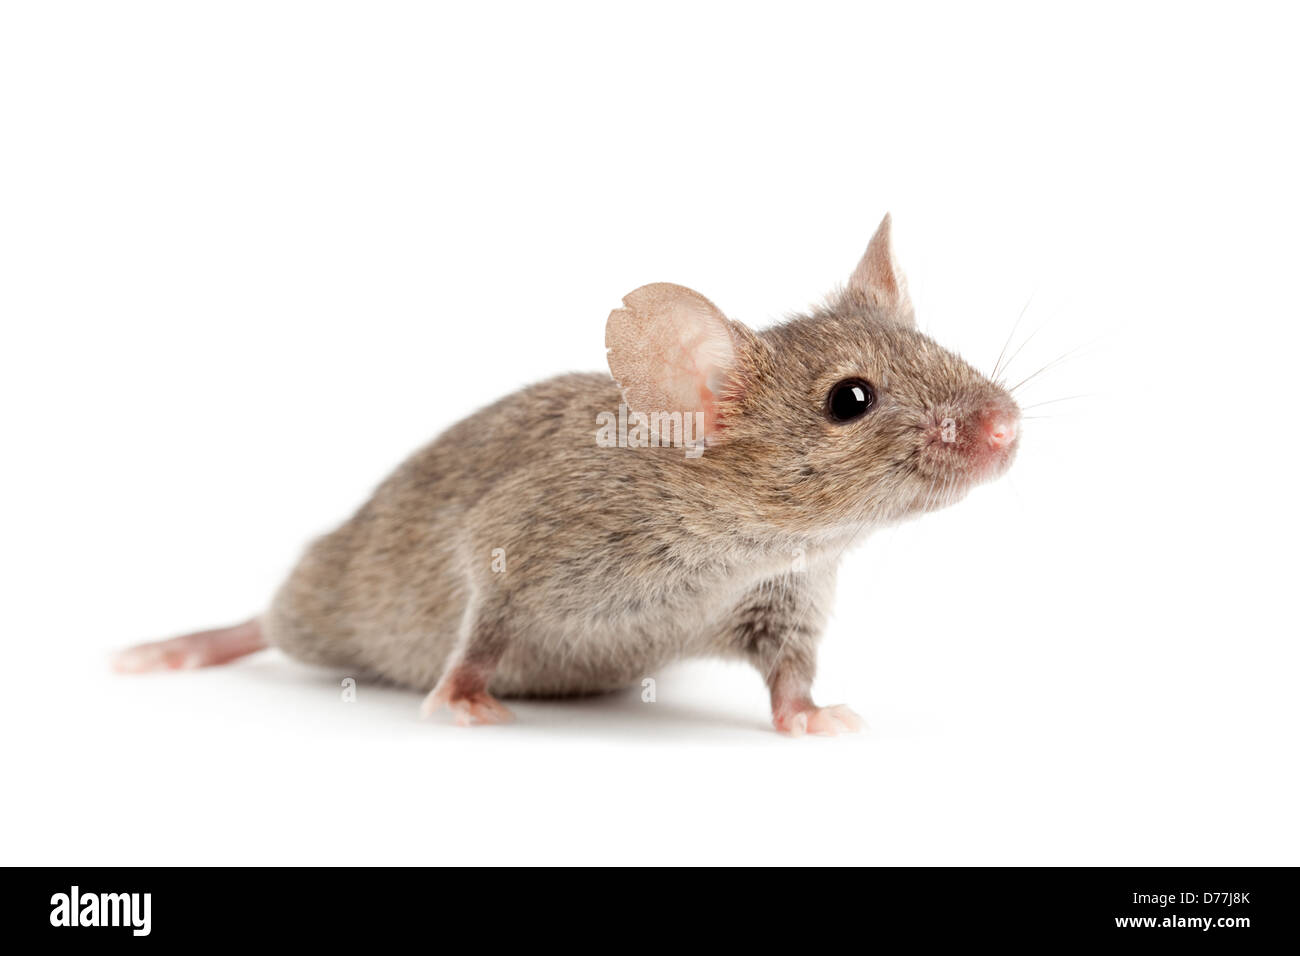 mouse closeup isolated on white background Stock Photo